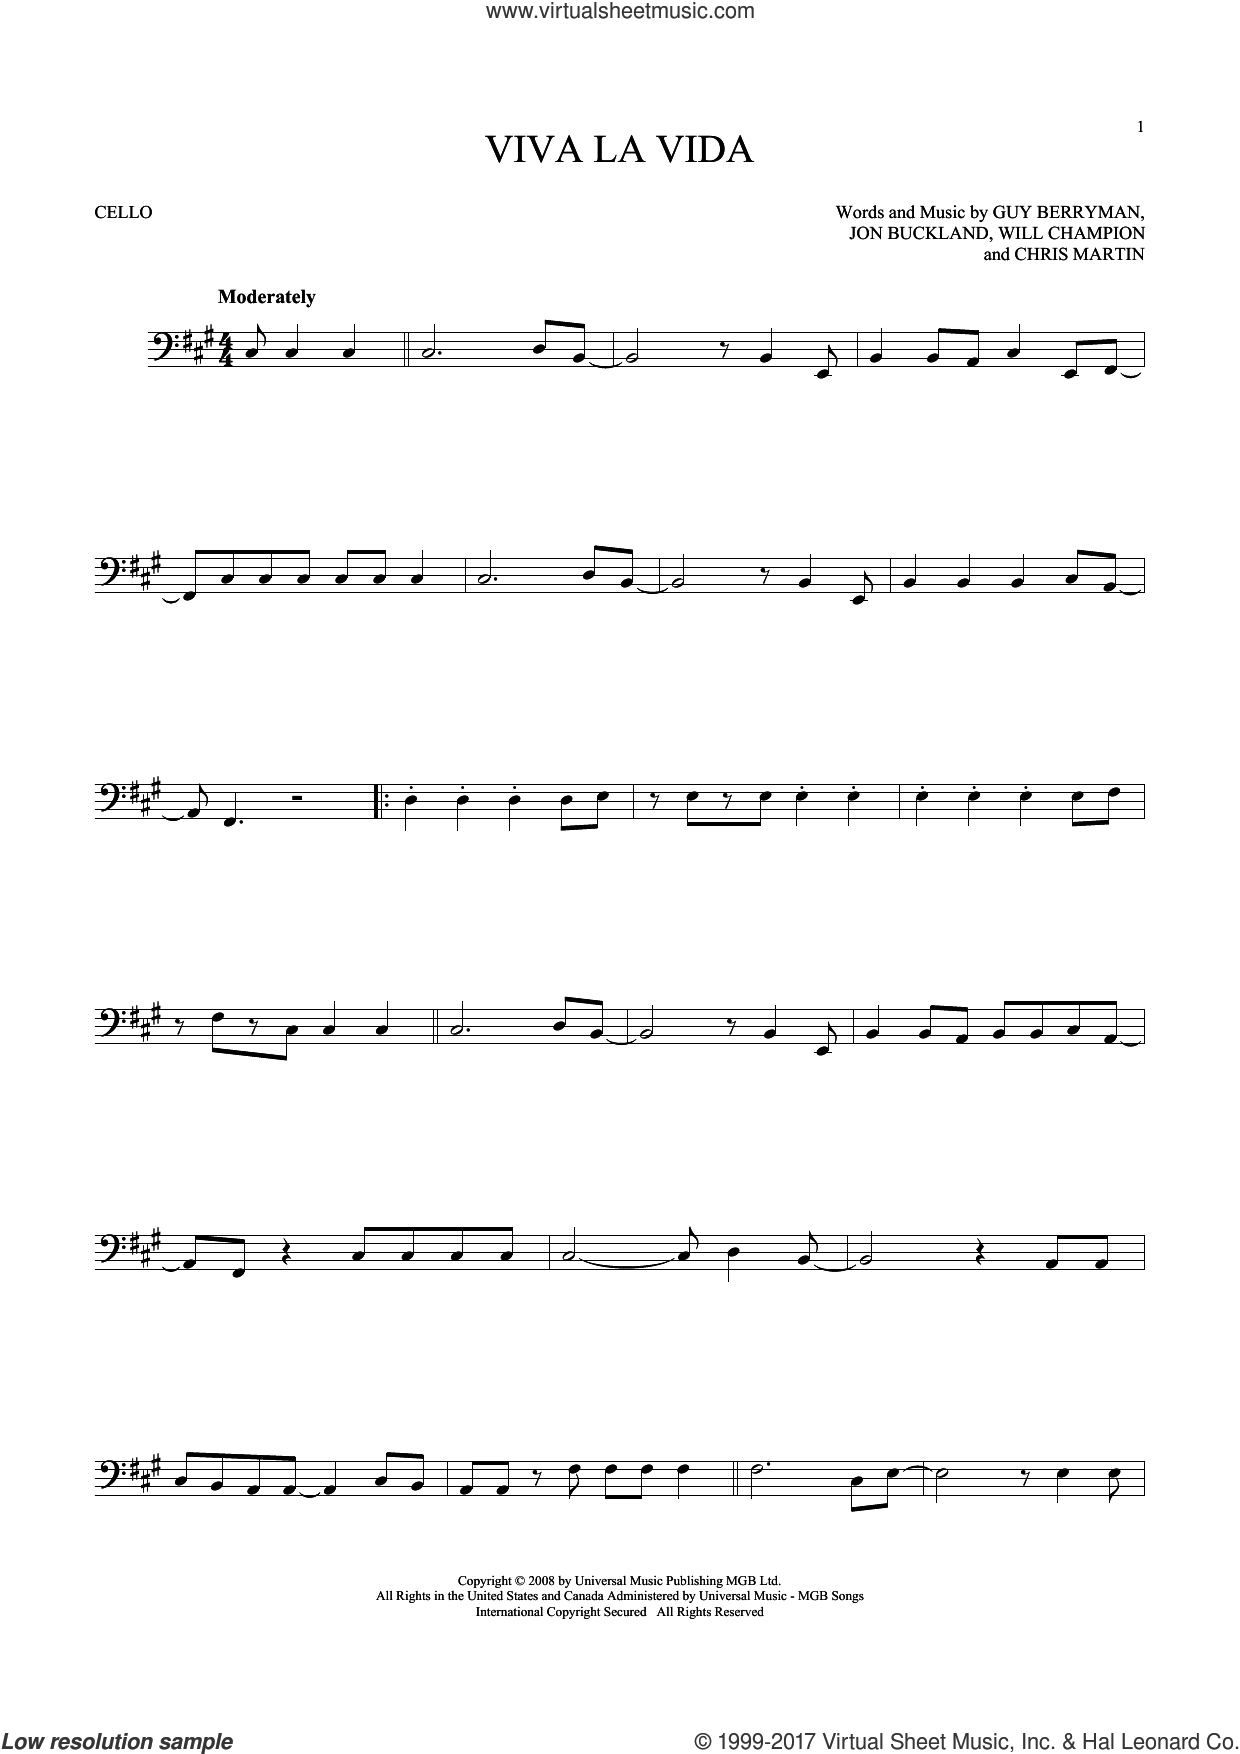 Coldplay - Viva La Vida Sheet Music For Cello Solo [Pdf] - Free Printable Violin Sheet Music For Viva La Vida